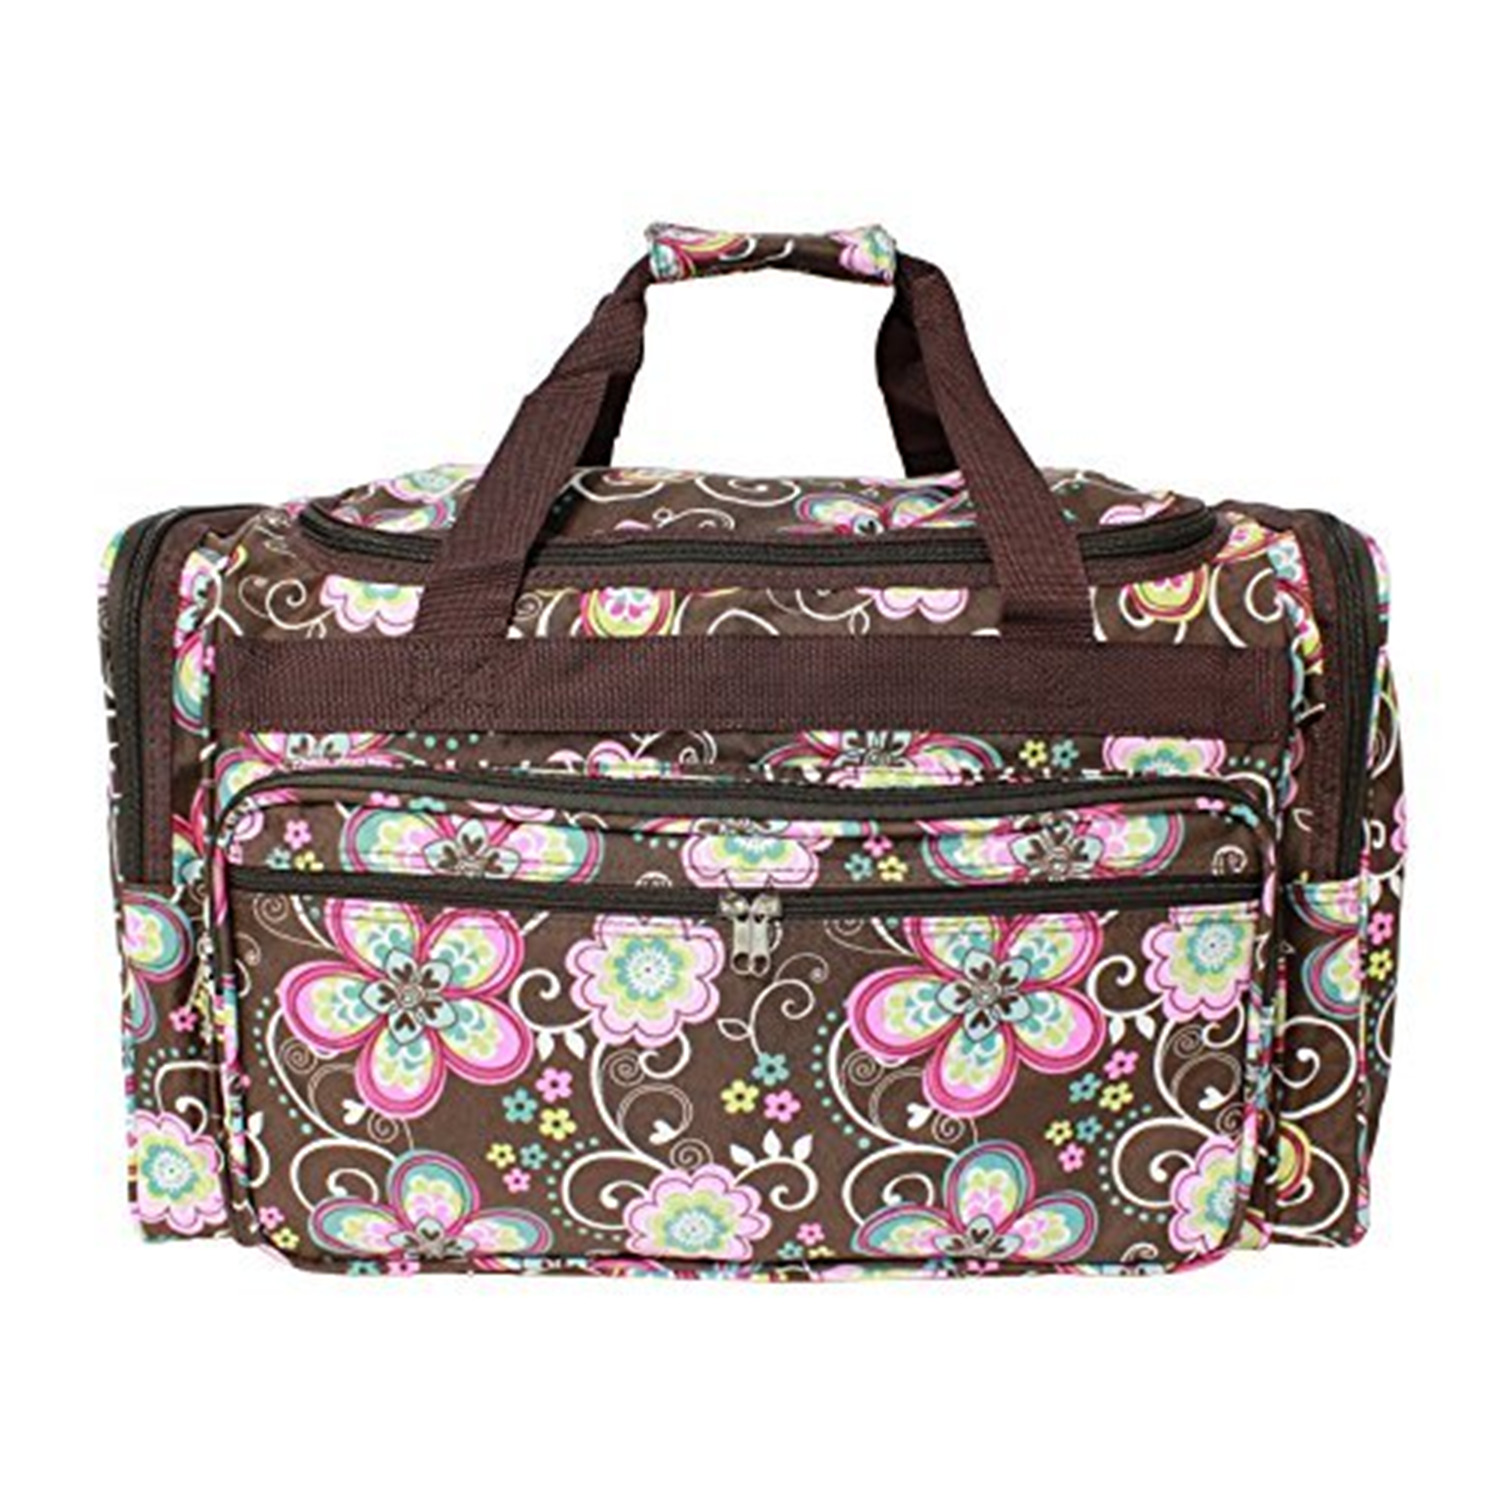 World Traveler 22-inch Travel Duffel Bag - Brown Daisy - image 1 of 2